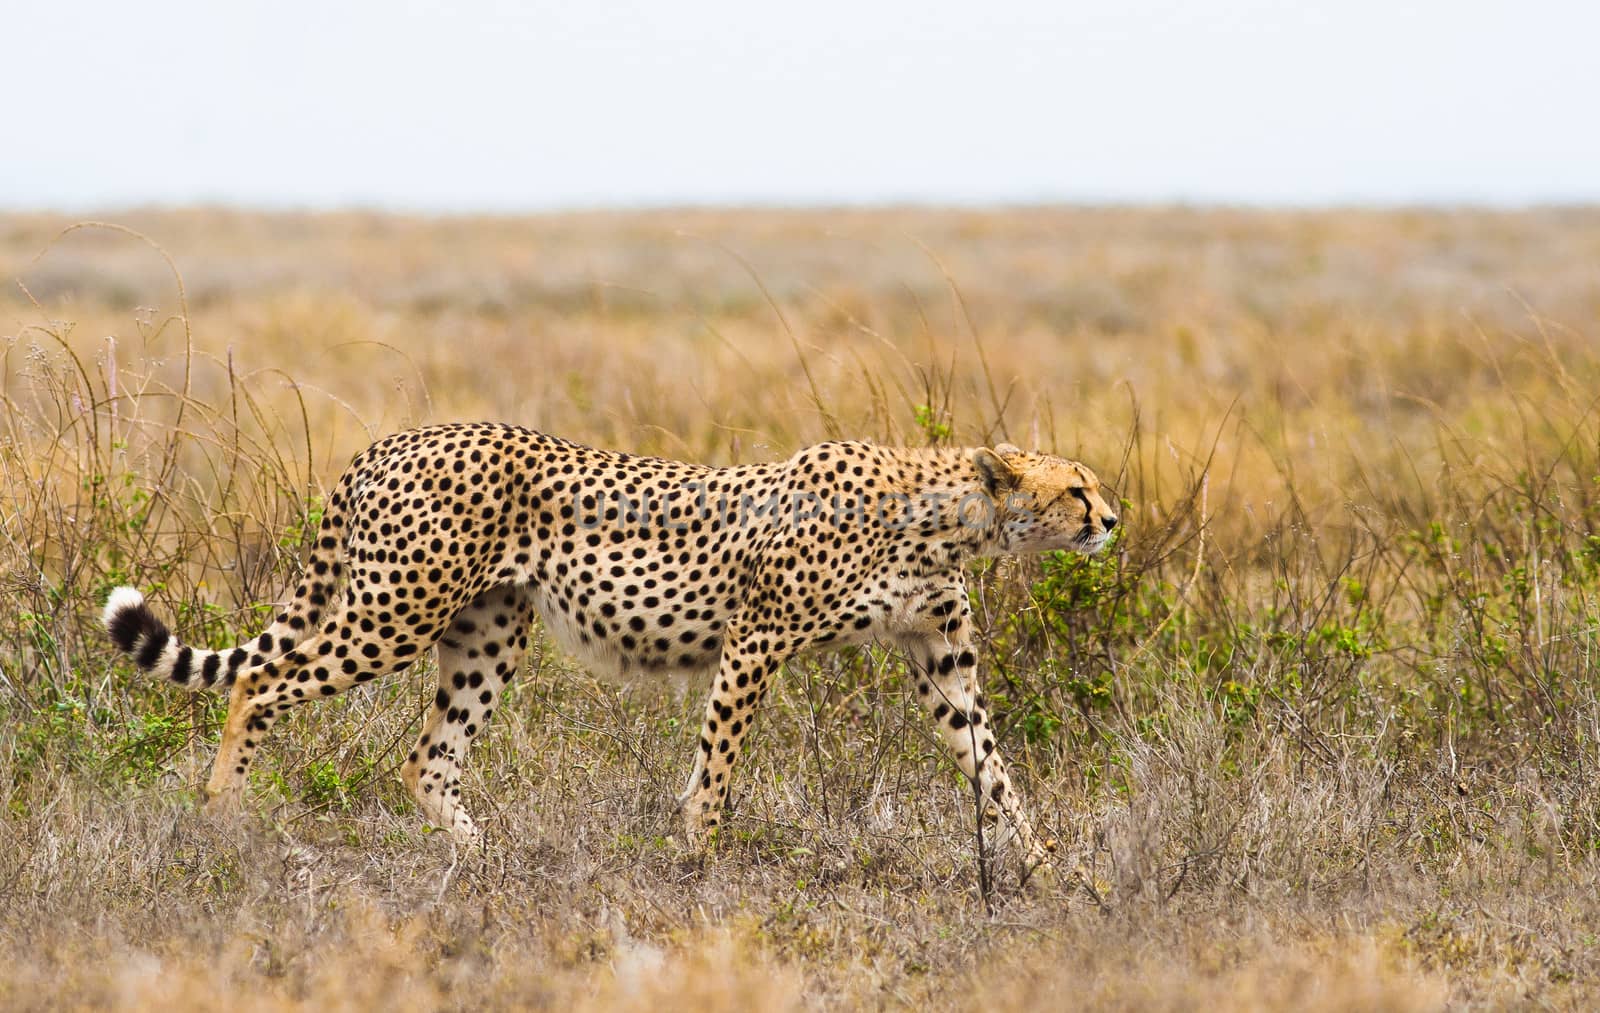 Cheetah by donvanstaden